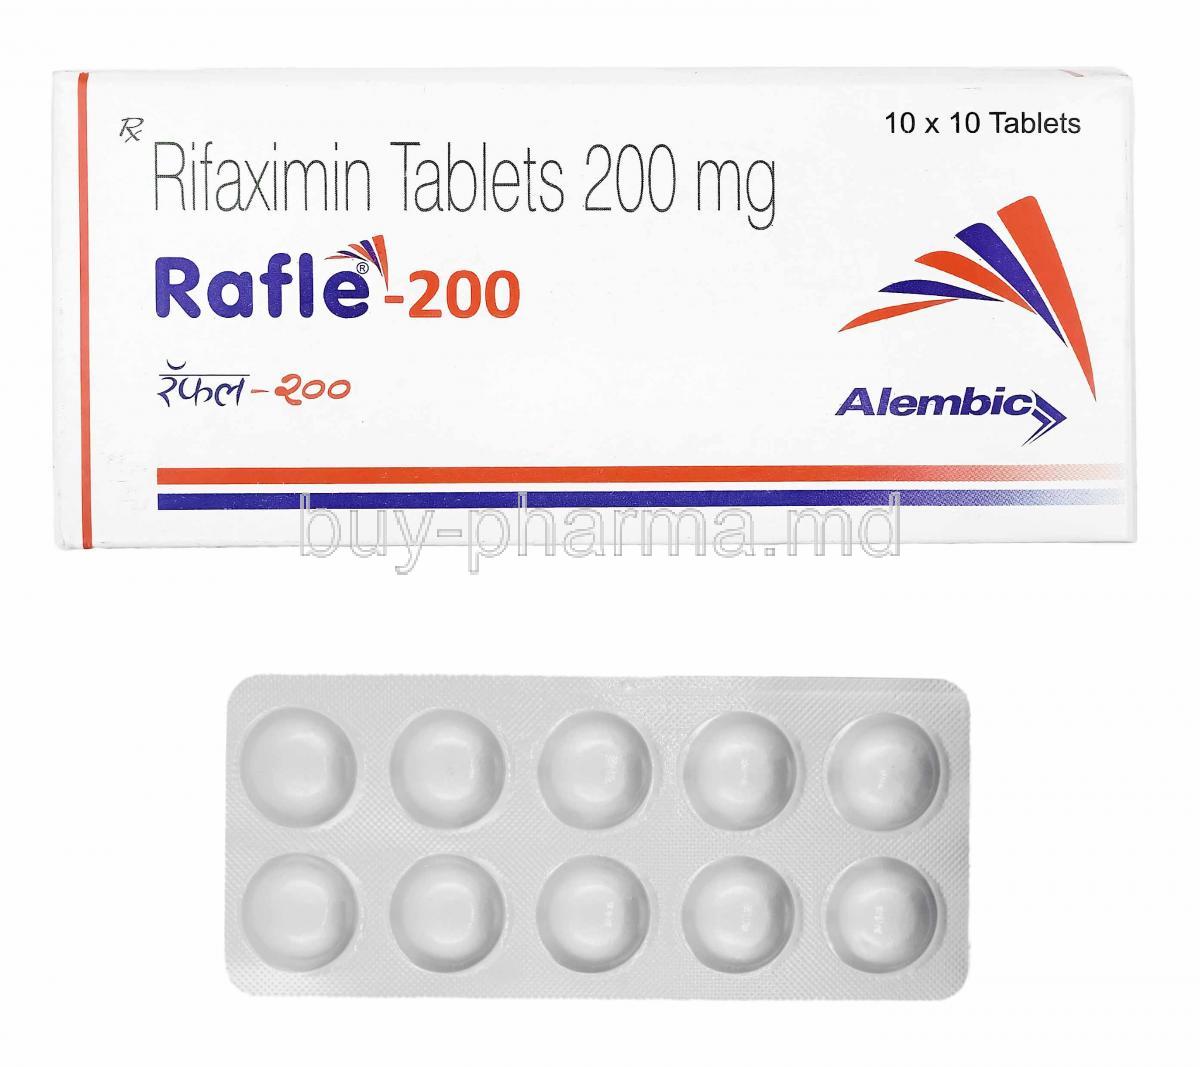 Rafle, Rifaximin 200mg box and tablets